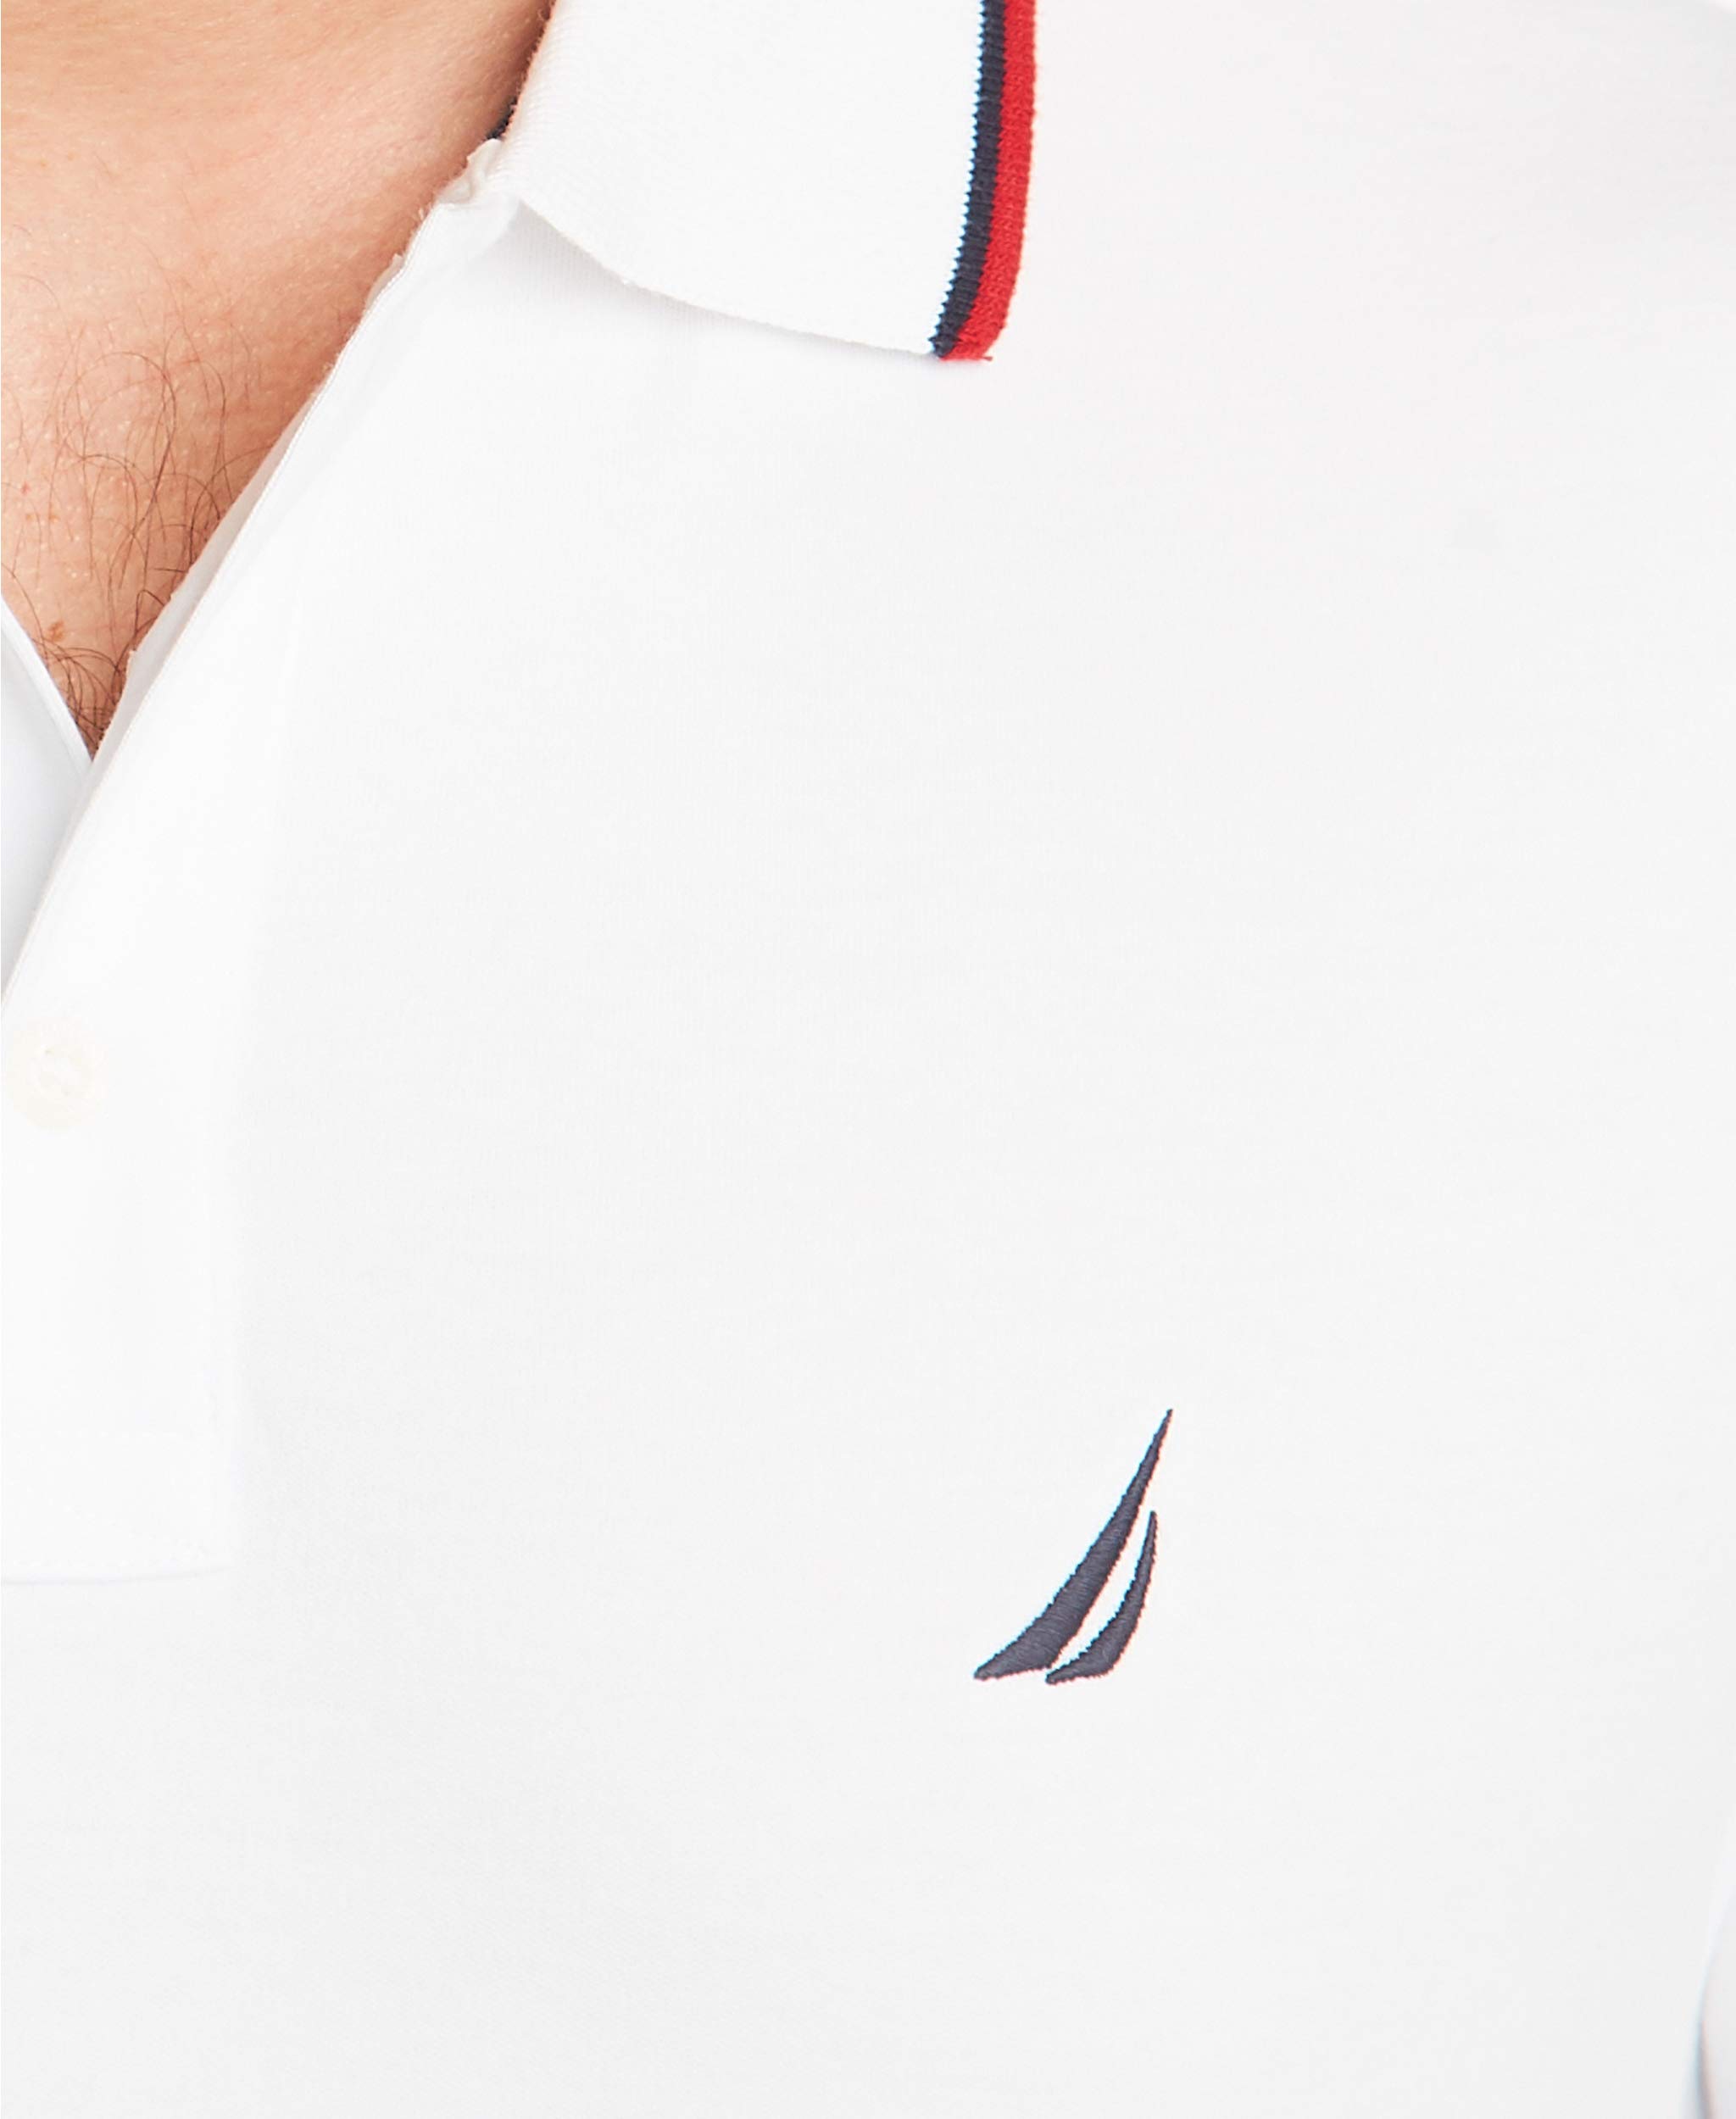 Nautica Men's Classic Fit Short Sleeve Dual Tipped Collar Polo Shirt